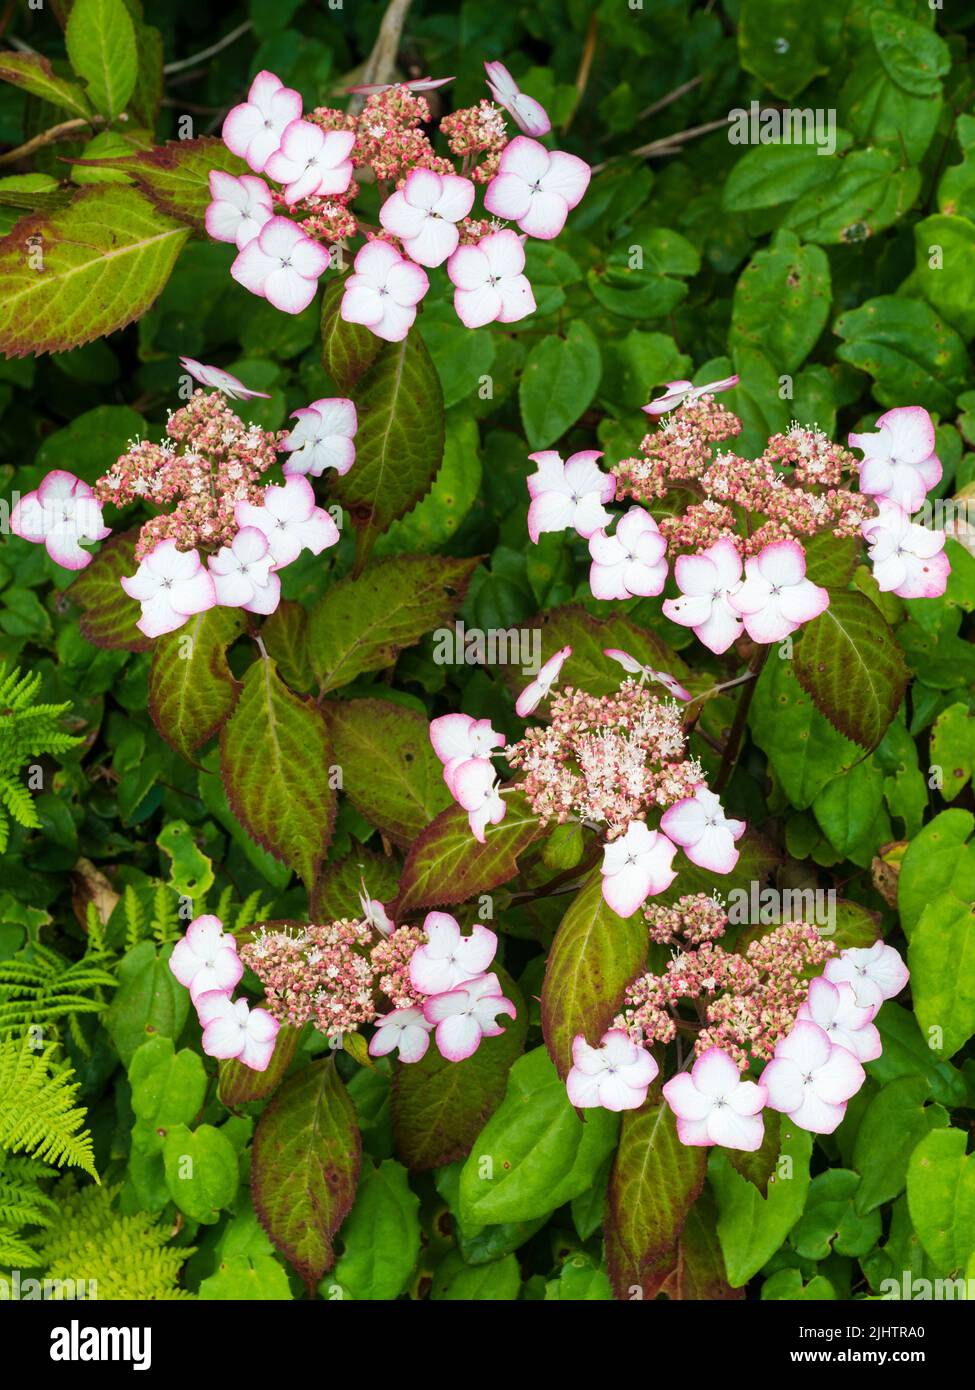 Pink picotee white lacecap flowers of the hardy mountain hydrangea shrub, Hydrangea serrata 'Kiyosumi' Stock Photo